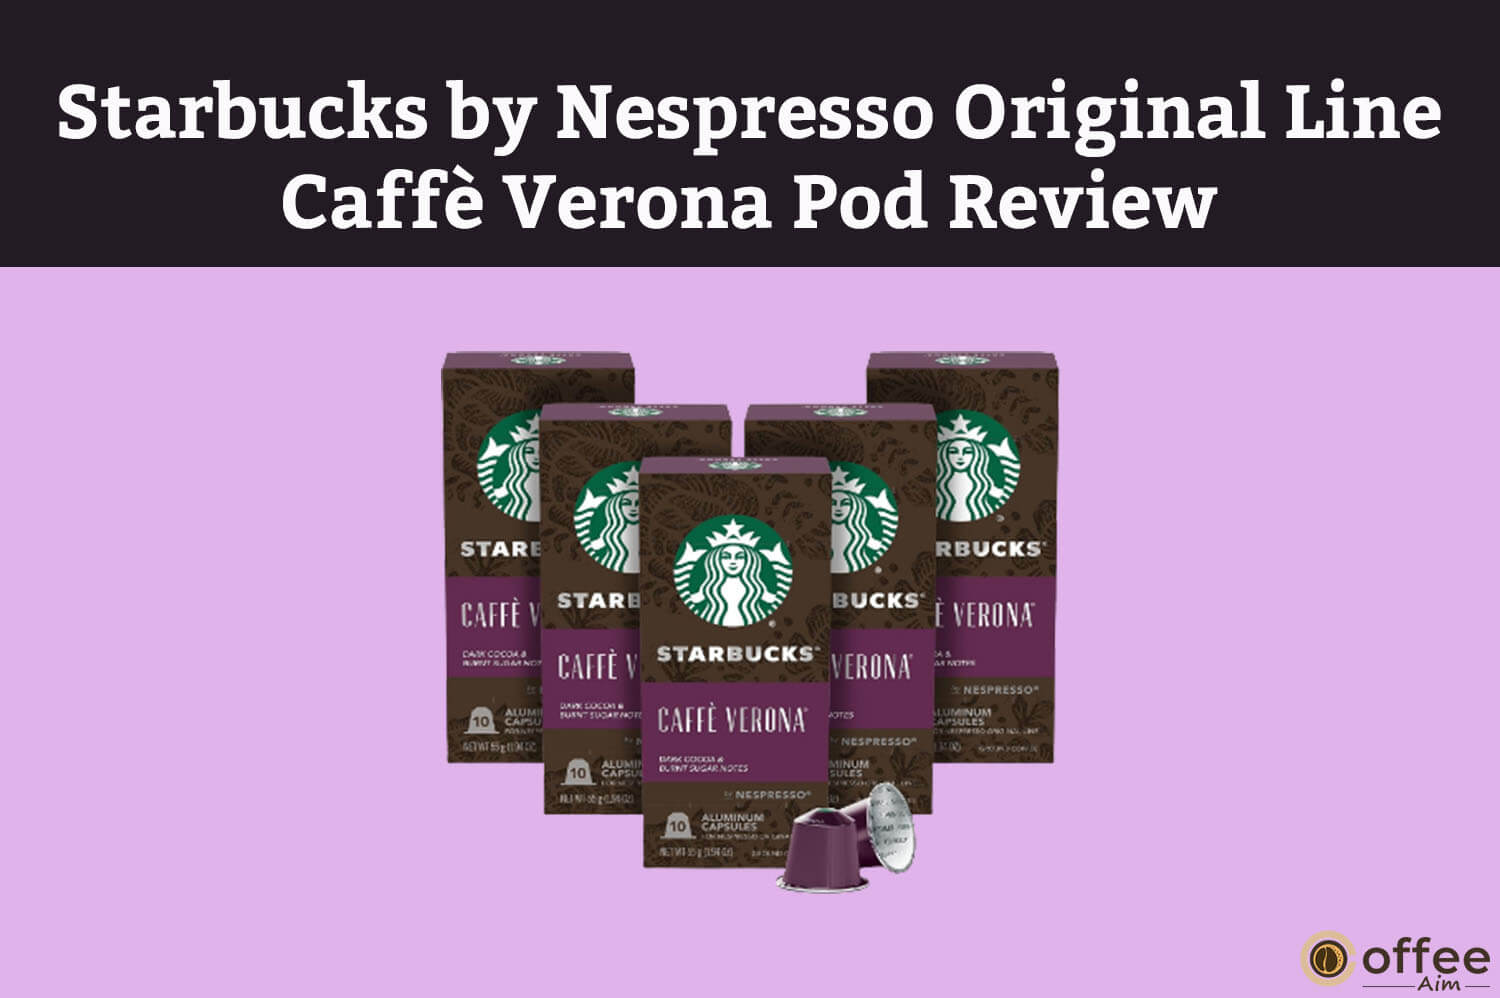 Featured image for the article "Starbucks by Nespresso Original Line Caffè Verona Pod Review"